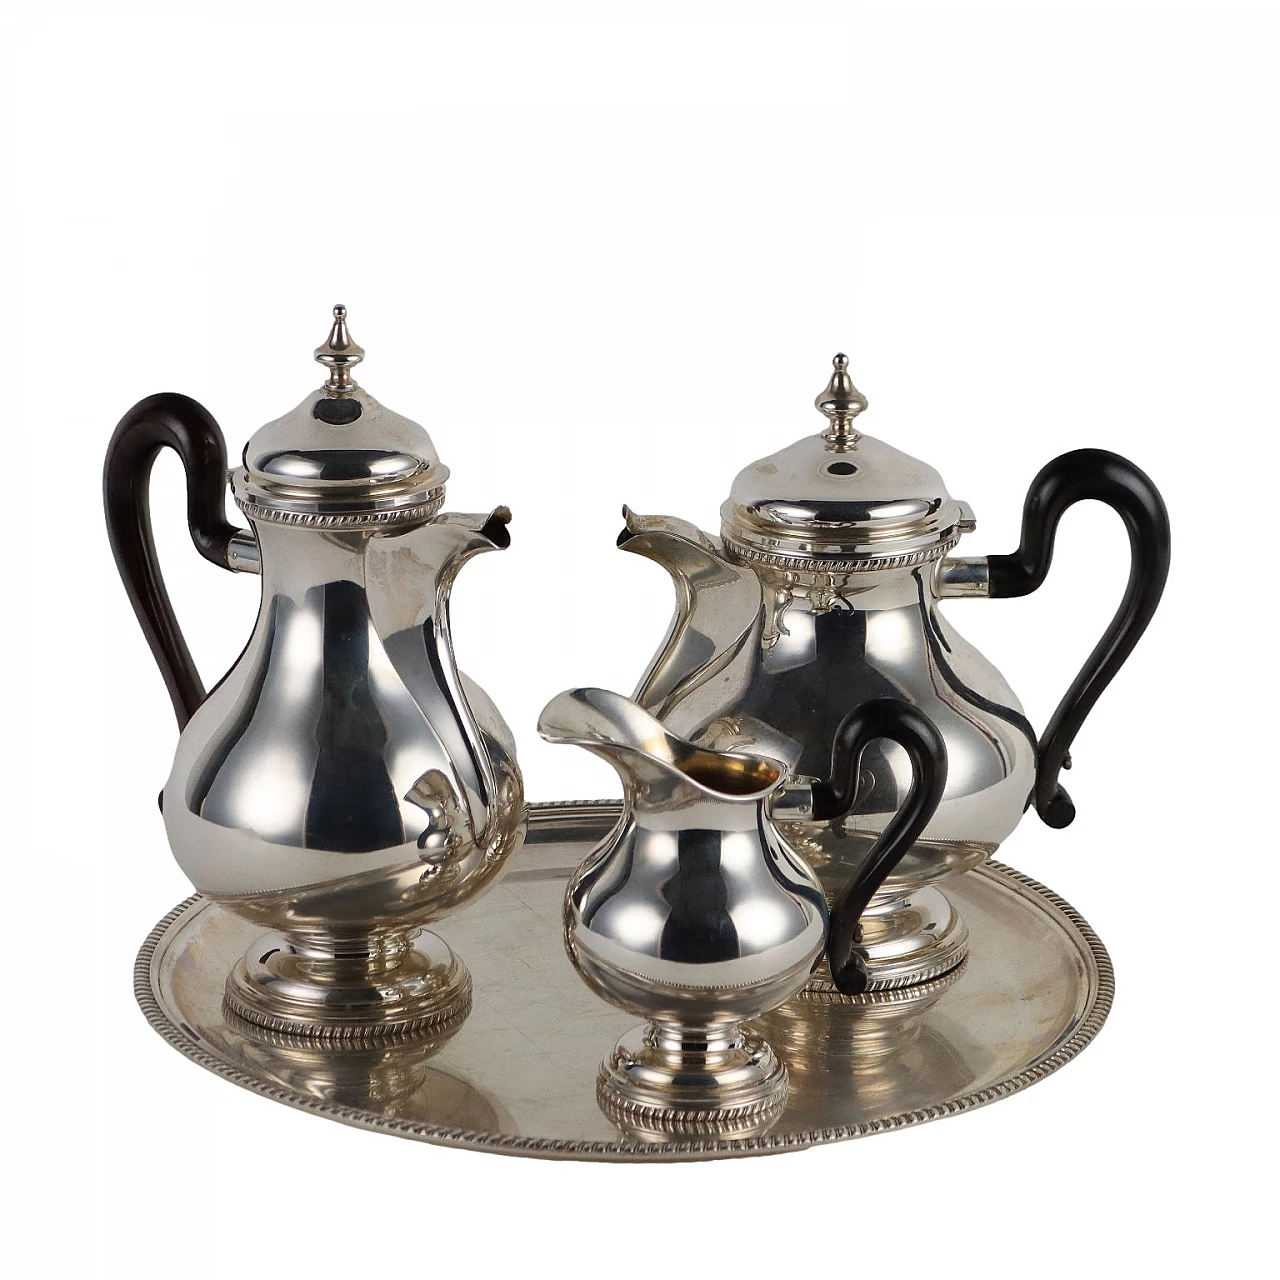 Tea and coffee silverware by Romeo Miracoli 1